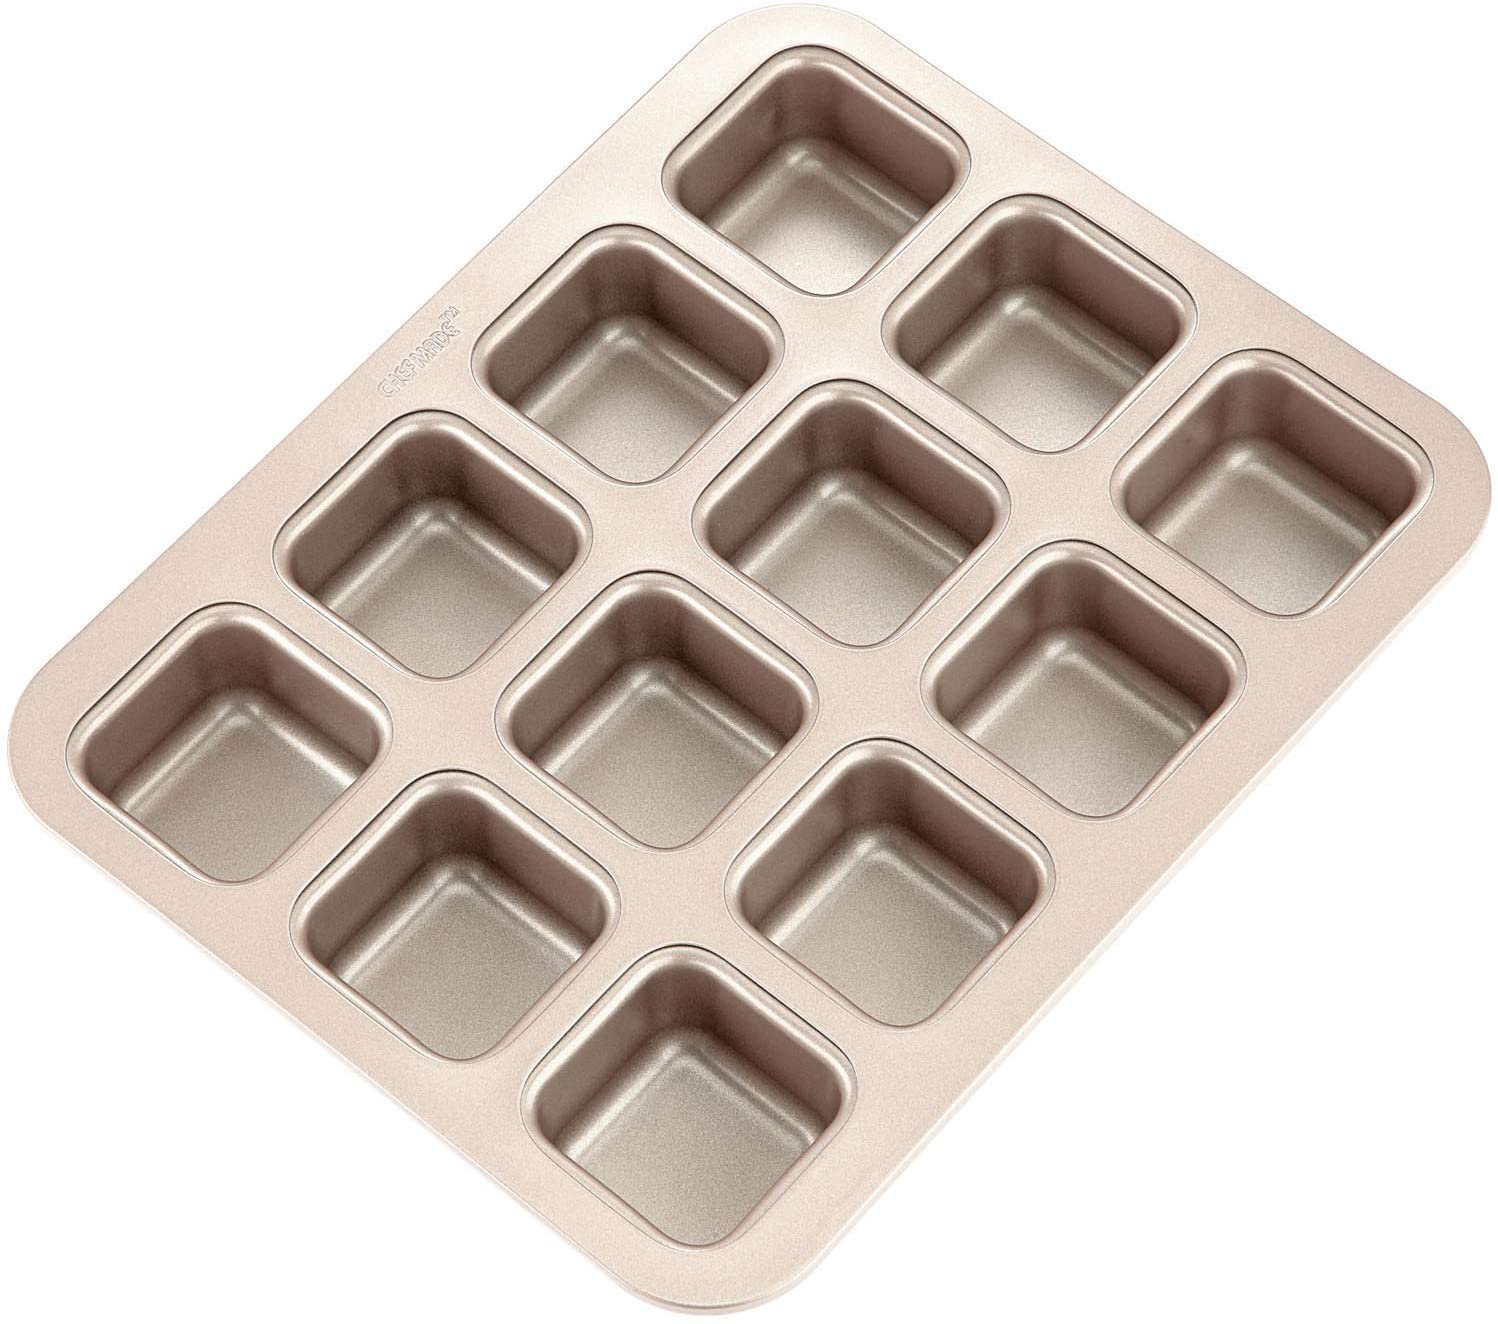 12-Cup Non-Stick Square Muffin Pan